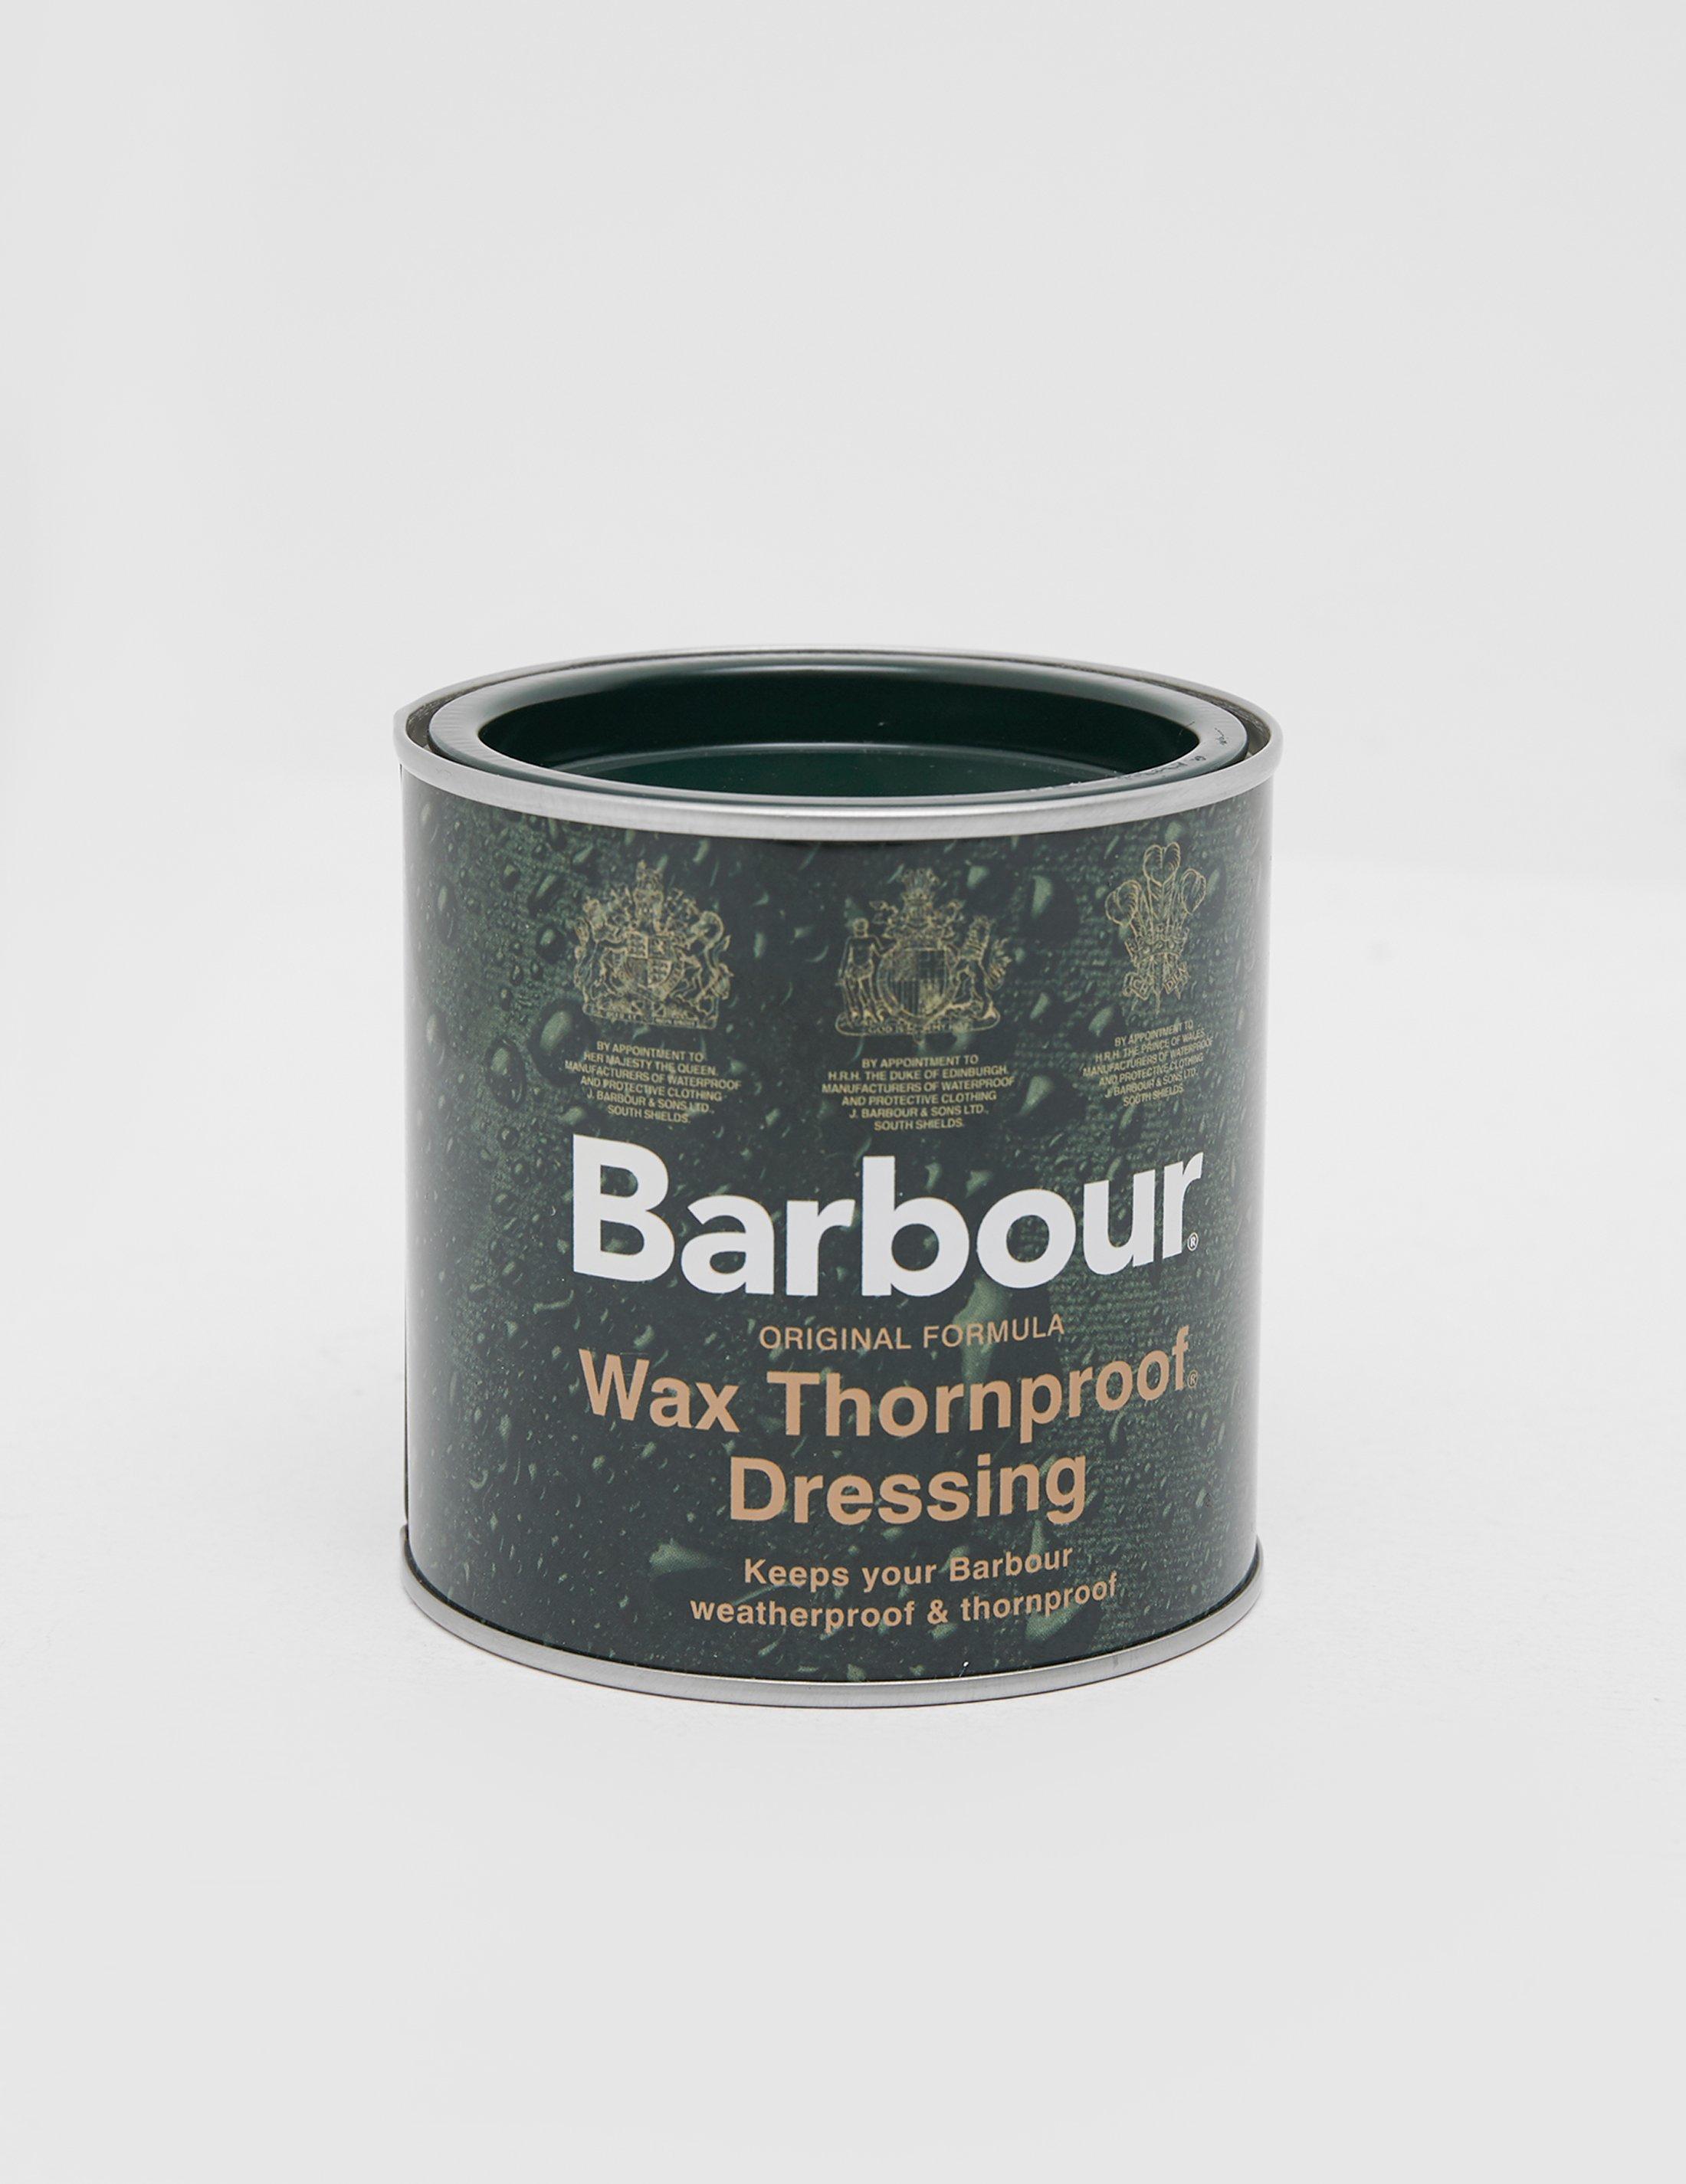 wax thornproof dressing